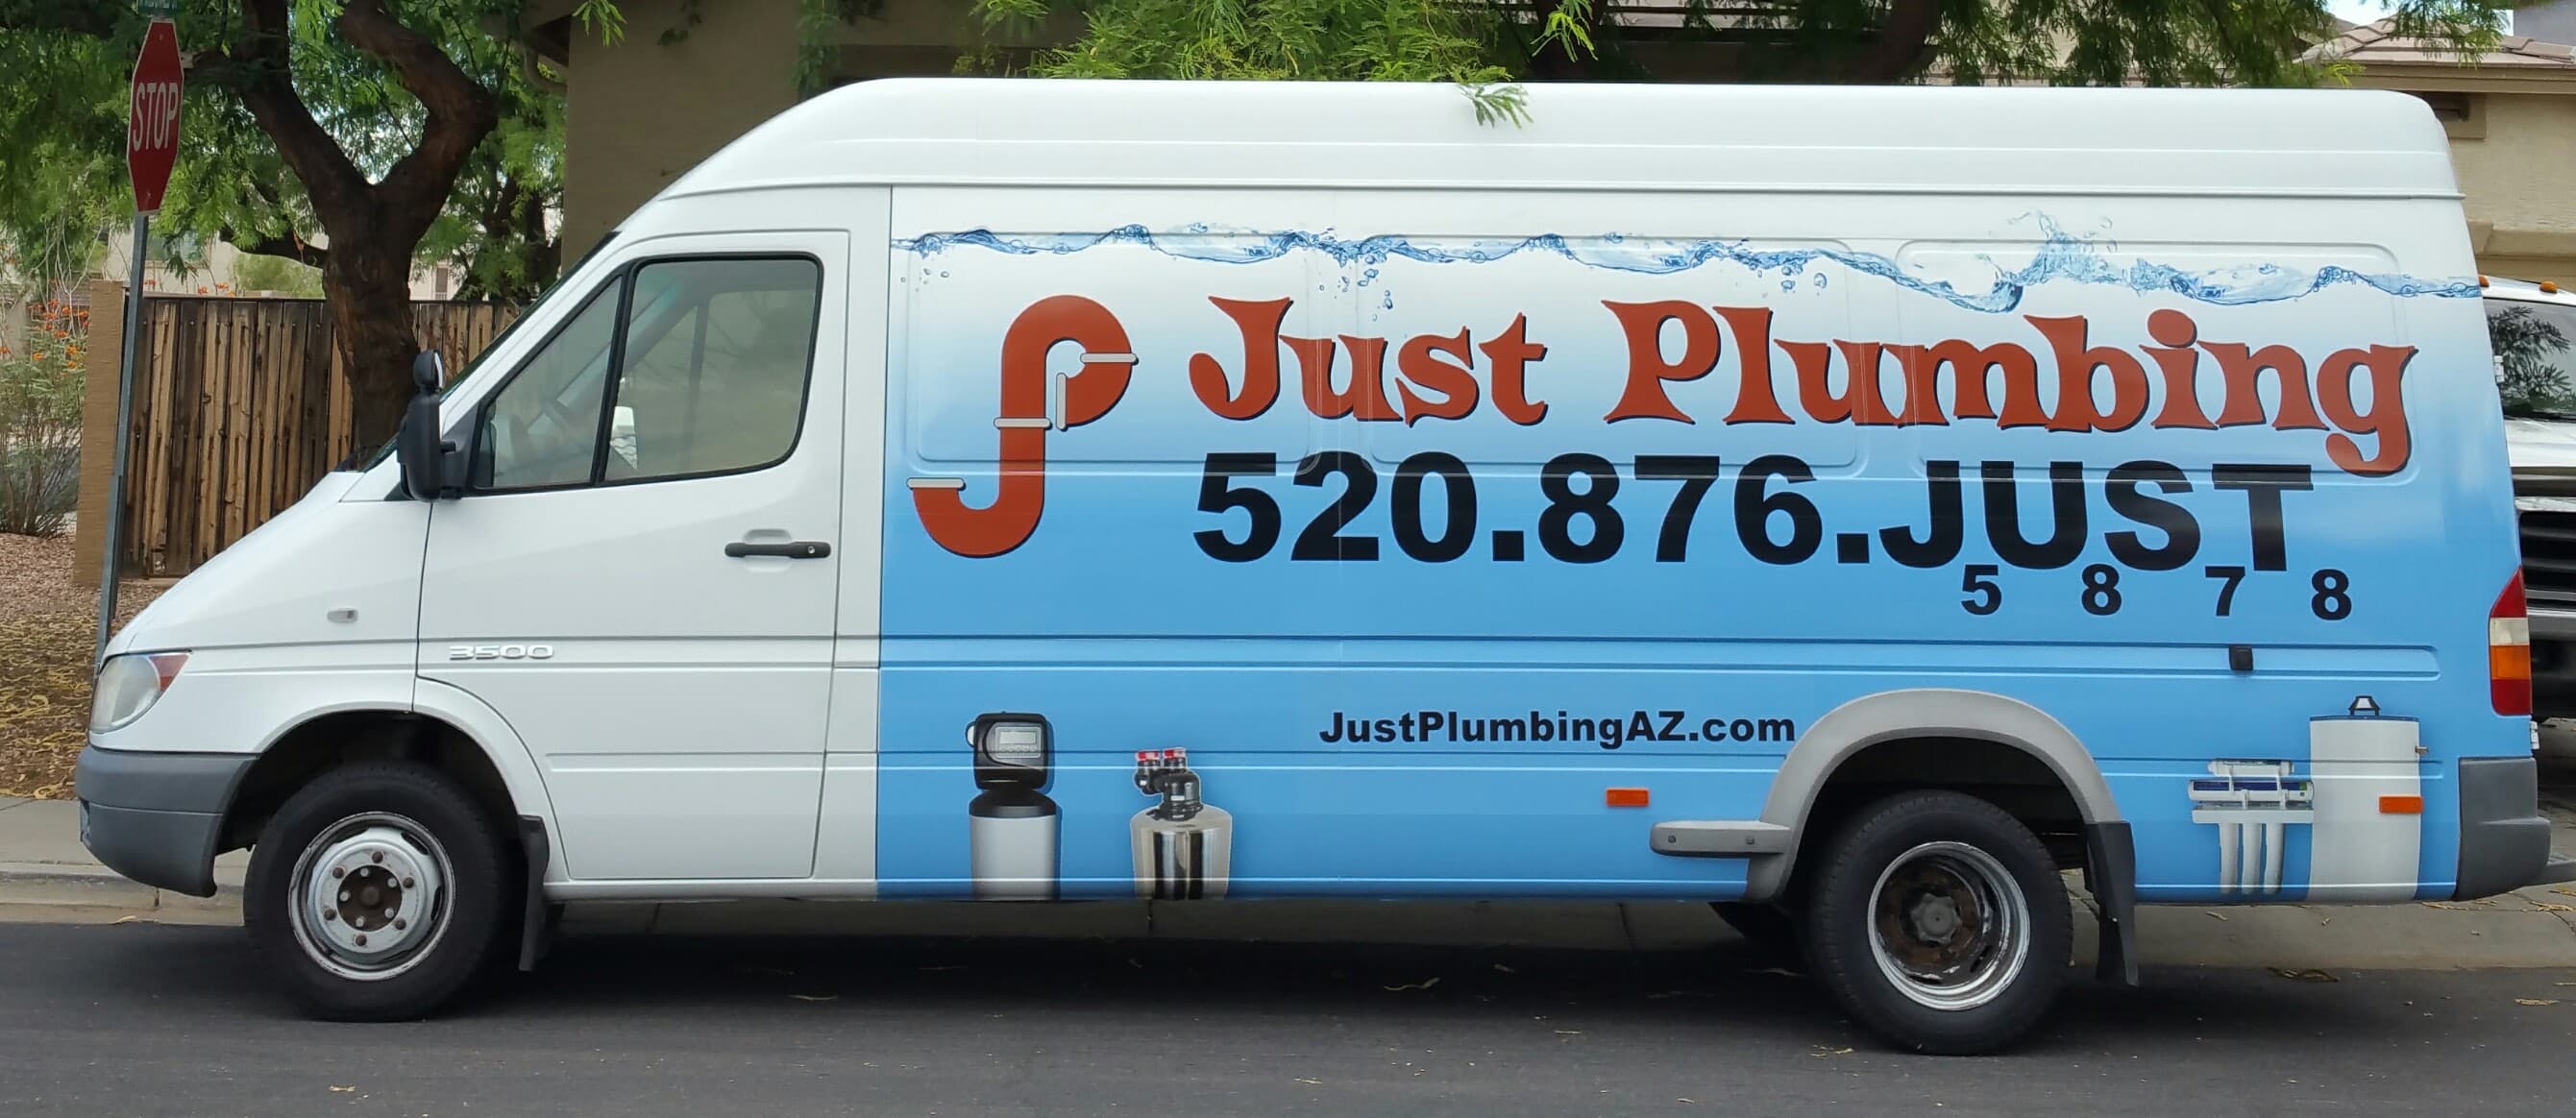 Just Plumbing - Casa Grande, AZ, US, plumbing service